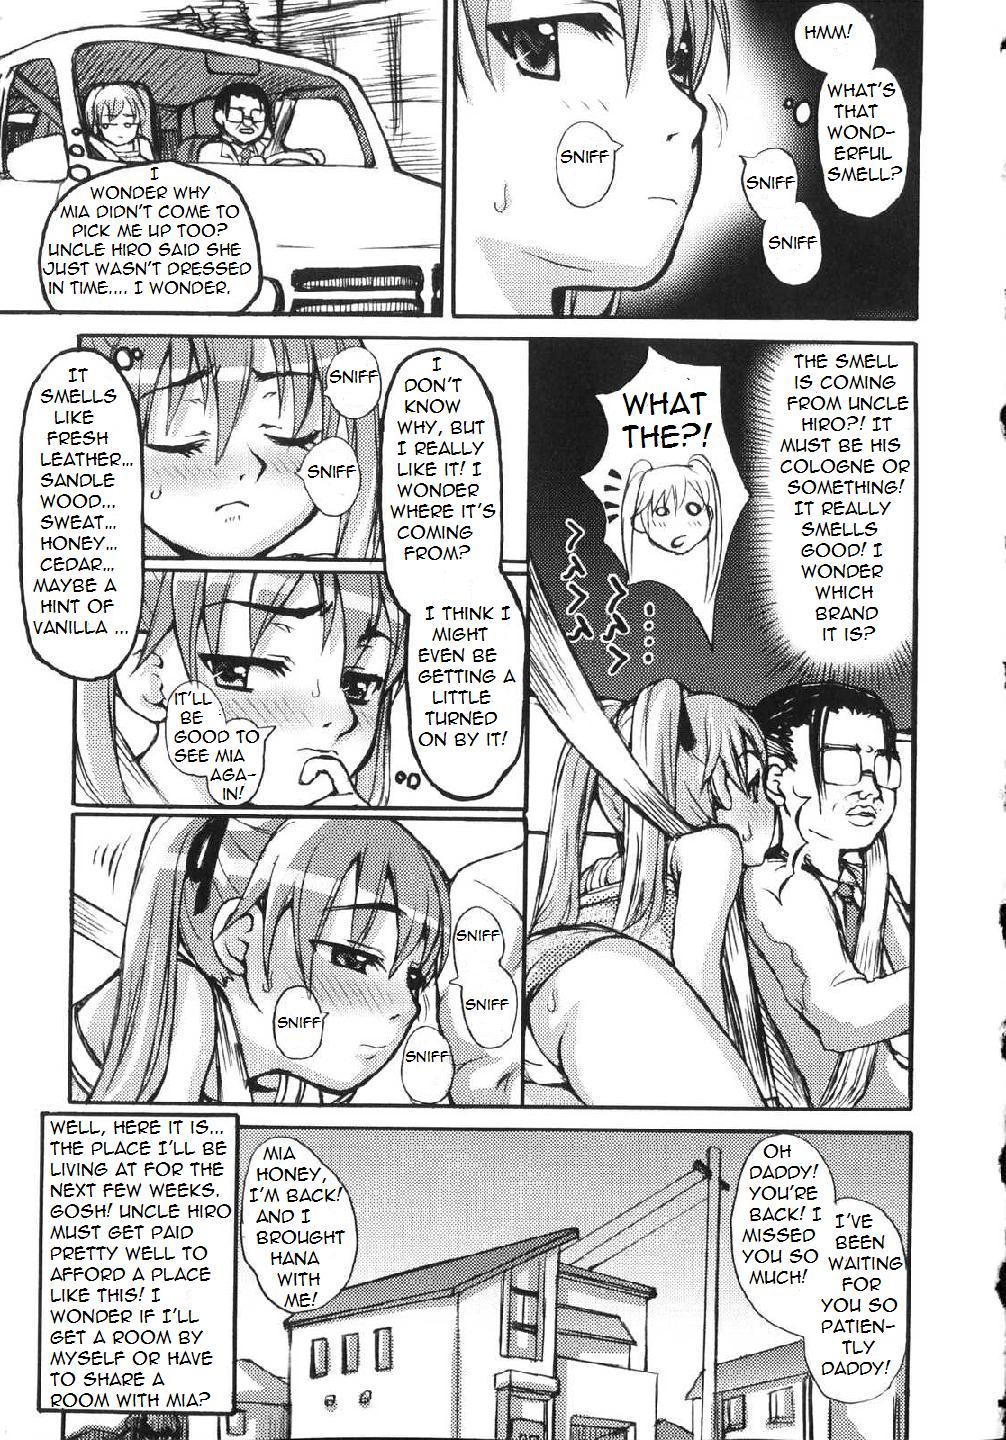 The Smell of Incest 1 hentai manga